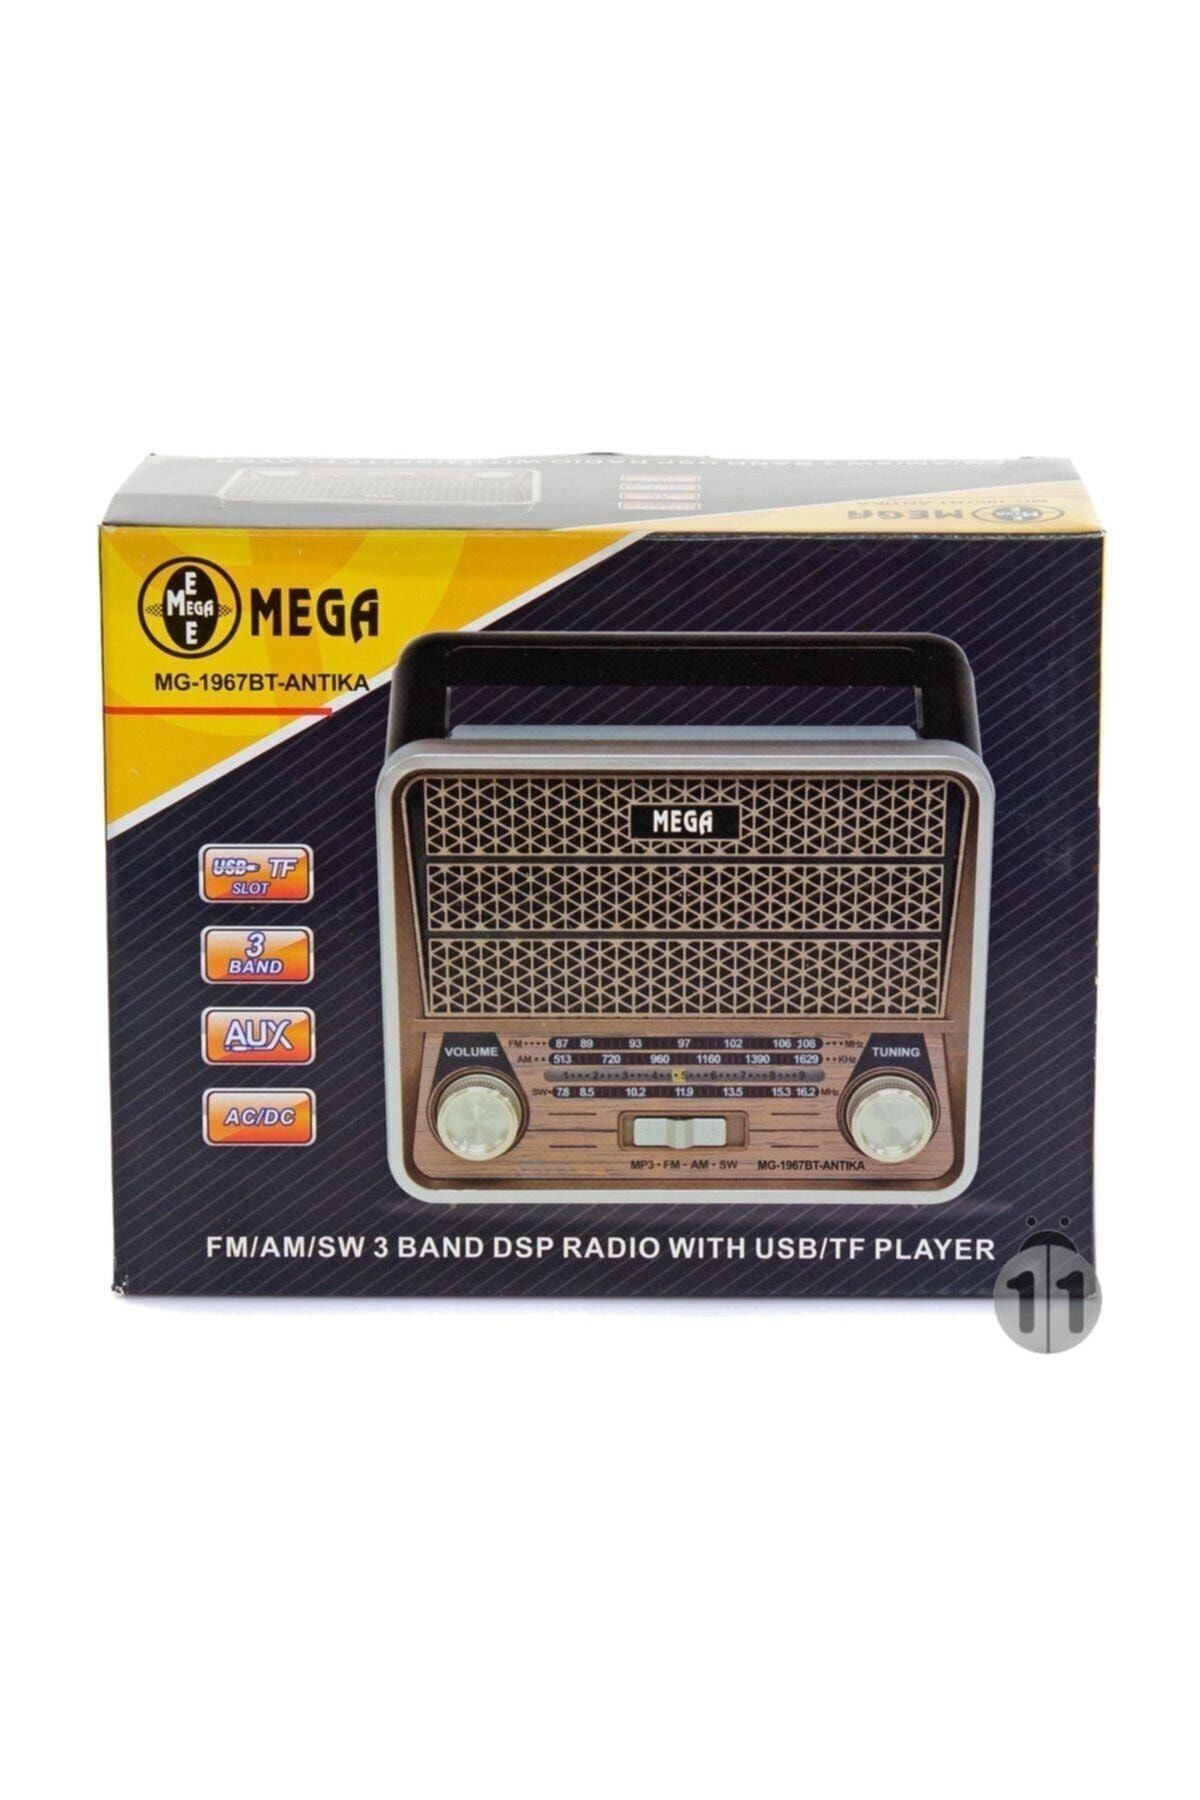 Mega Mg-1967u Antika Usb+hafıza Kartlı Radyo Kulaklık Hediyeli